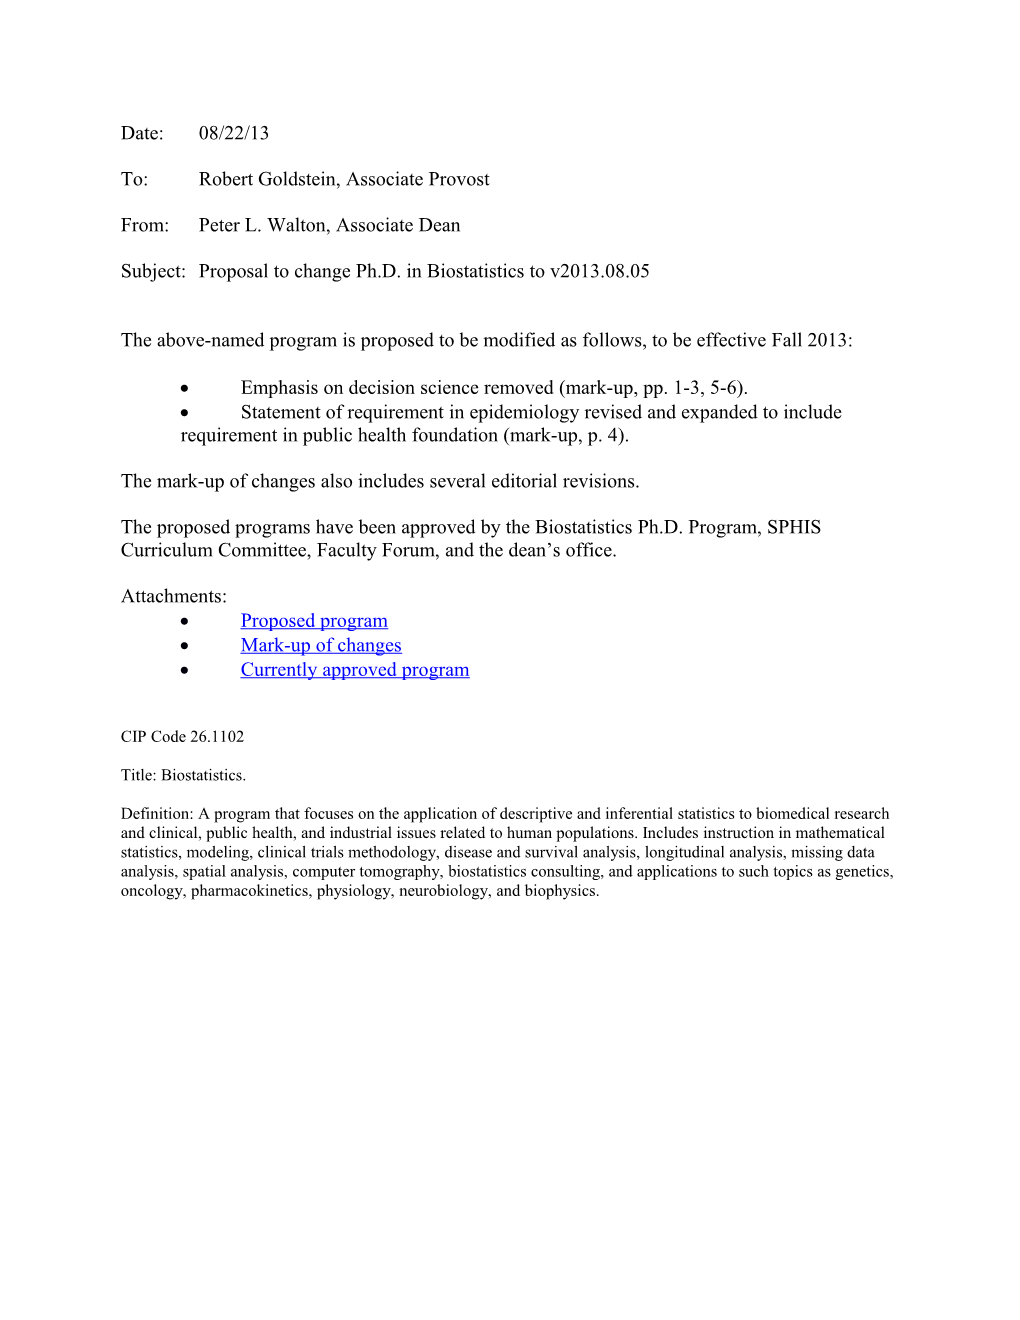 Proposal to Change Biostatistics Ph.D. Program to V2013.08.05